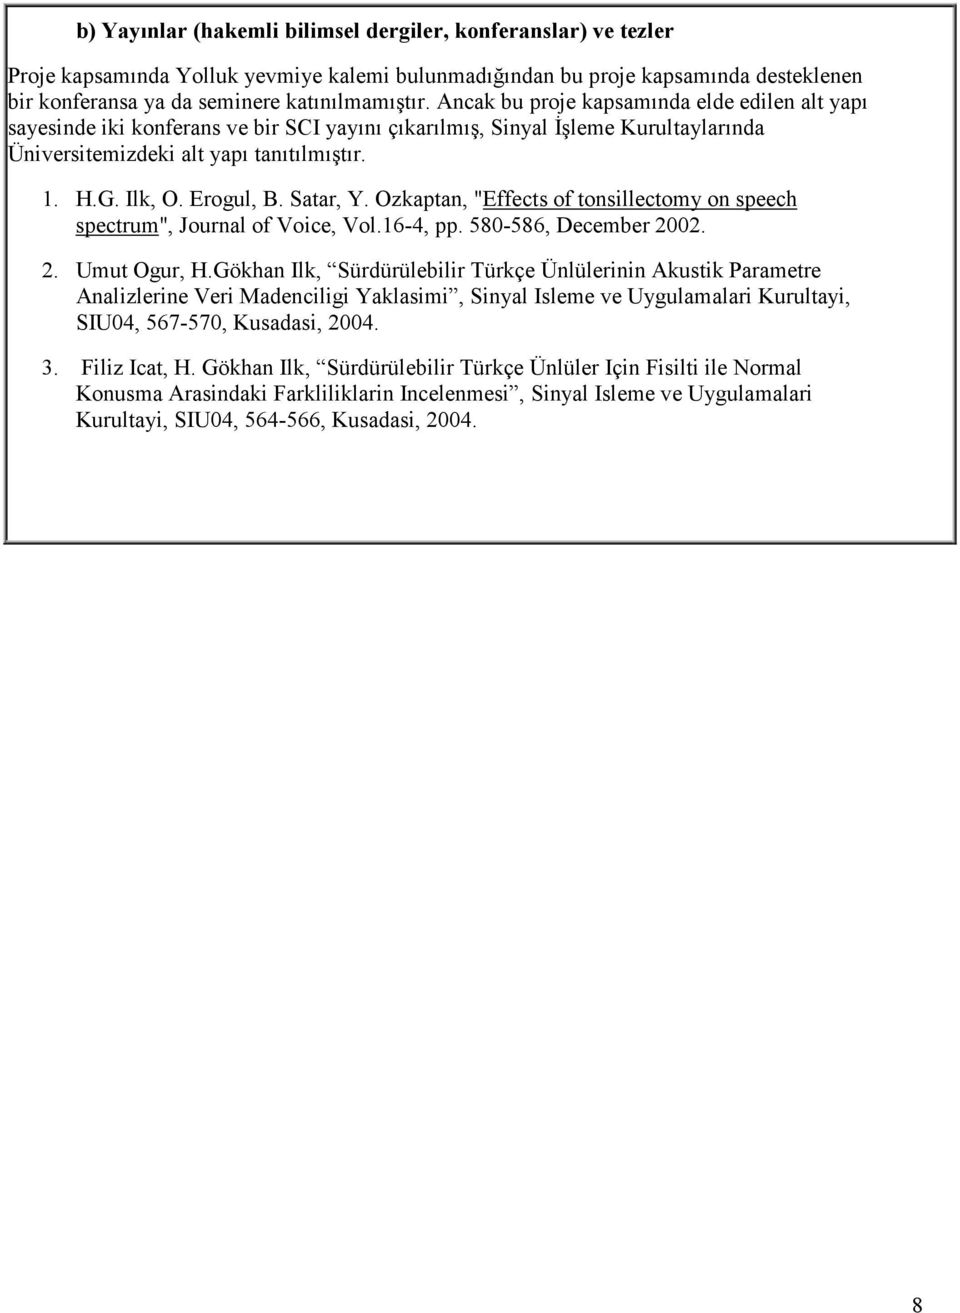 Satar, Y. Ozkaptan, "Effects of tonsillectomy on speech spectrum", Journal of Voice, Vol.16-4, pp. 580-586, December 2002. 2. Umut Ogur, H.